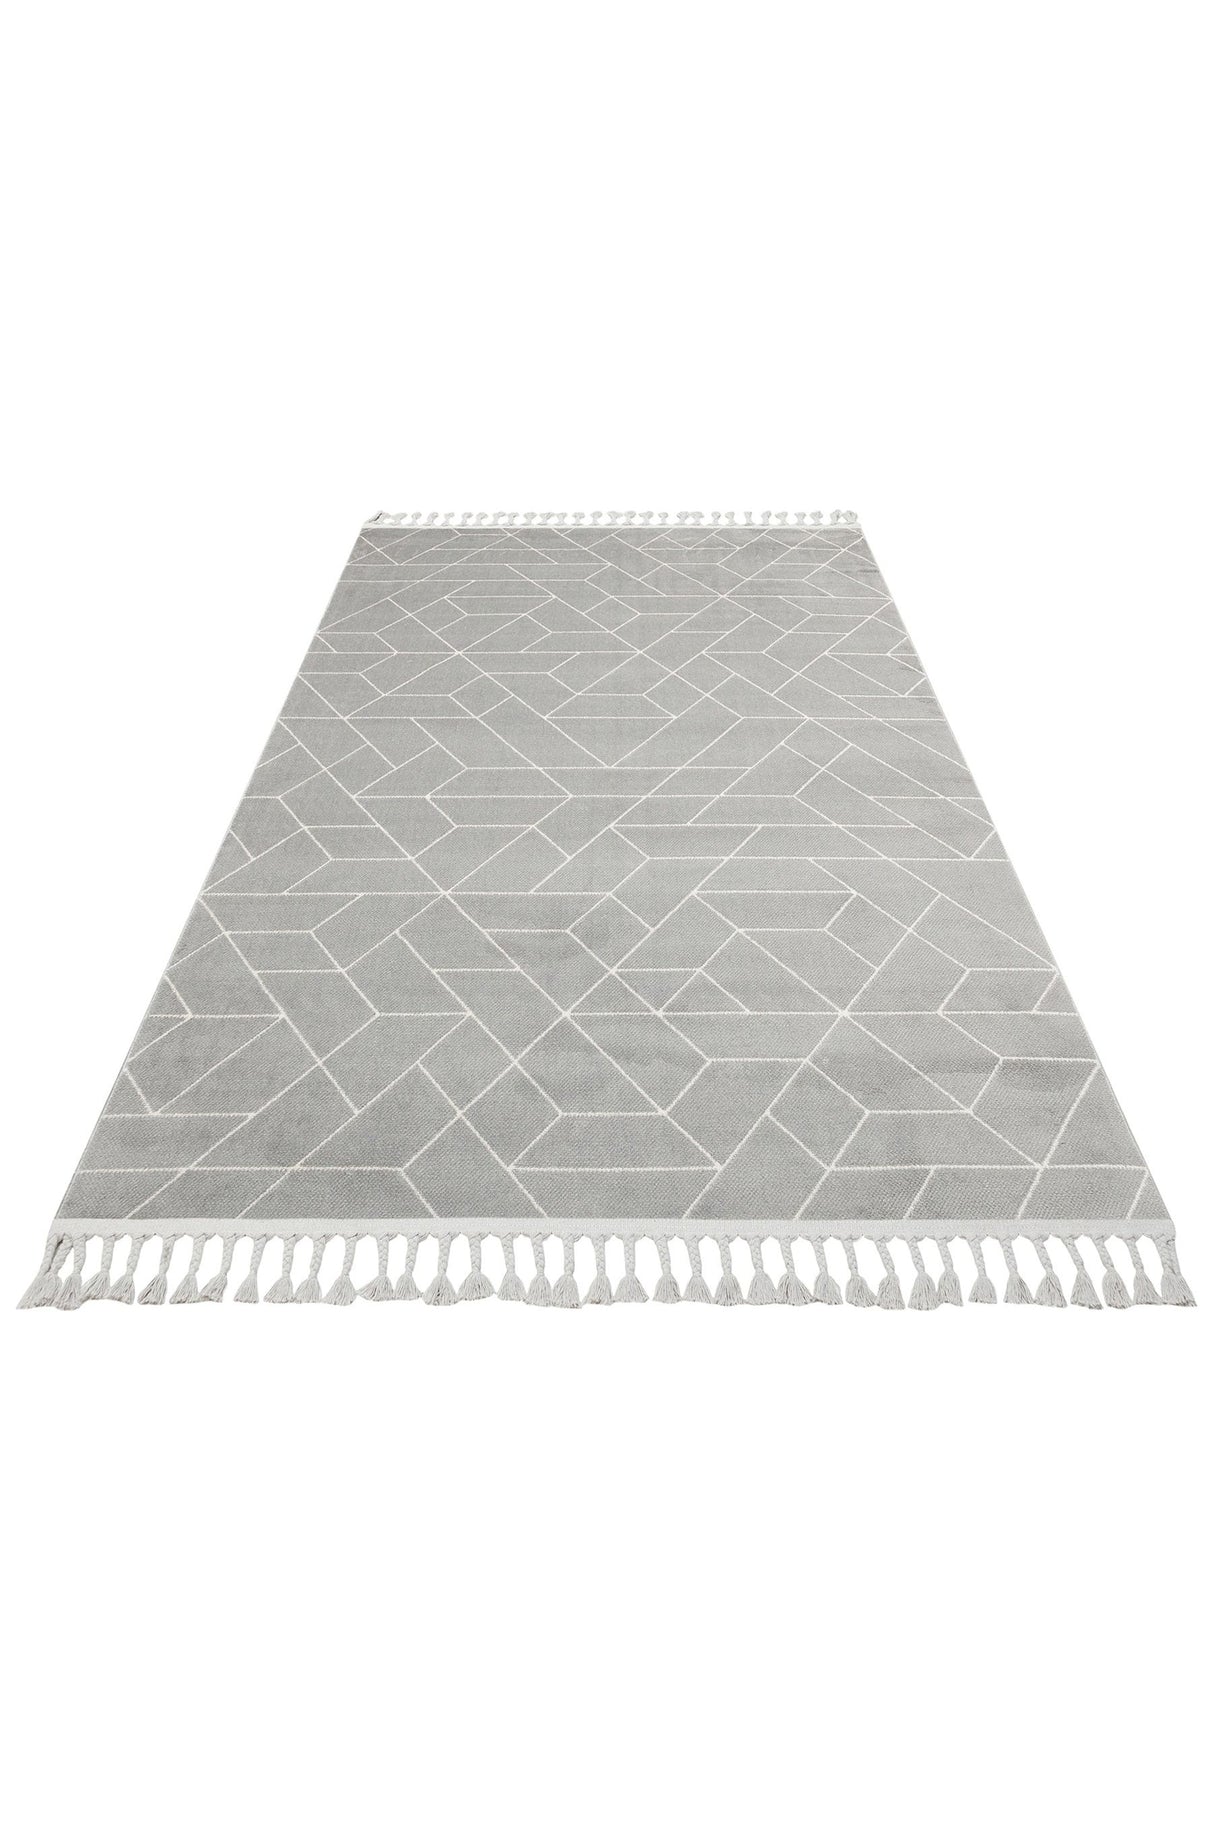 #Turkish_Carpets_Rugs# #Modern_Carpets# #Abrash_Carpets#Urb 03 Grey White